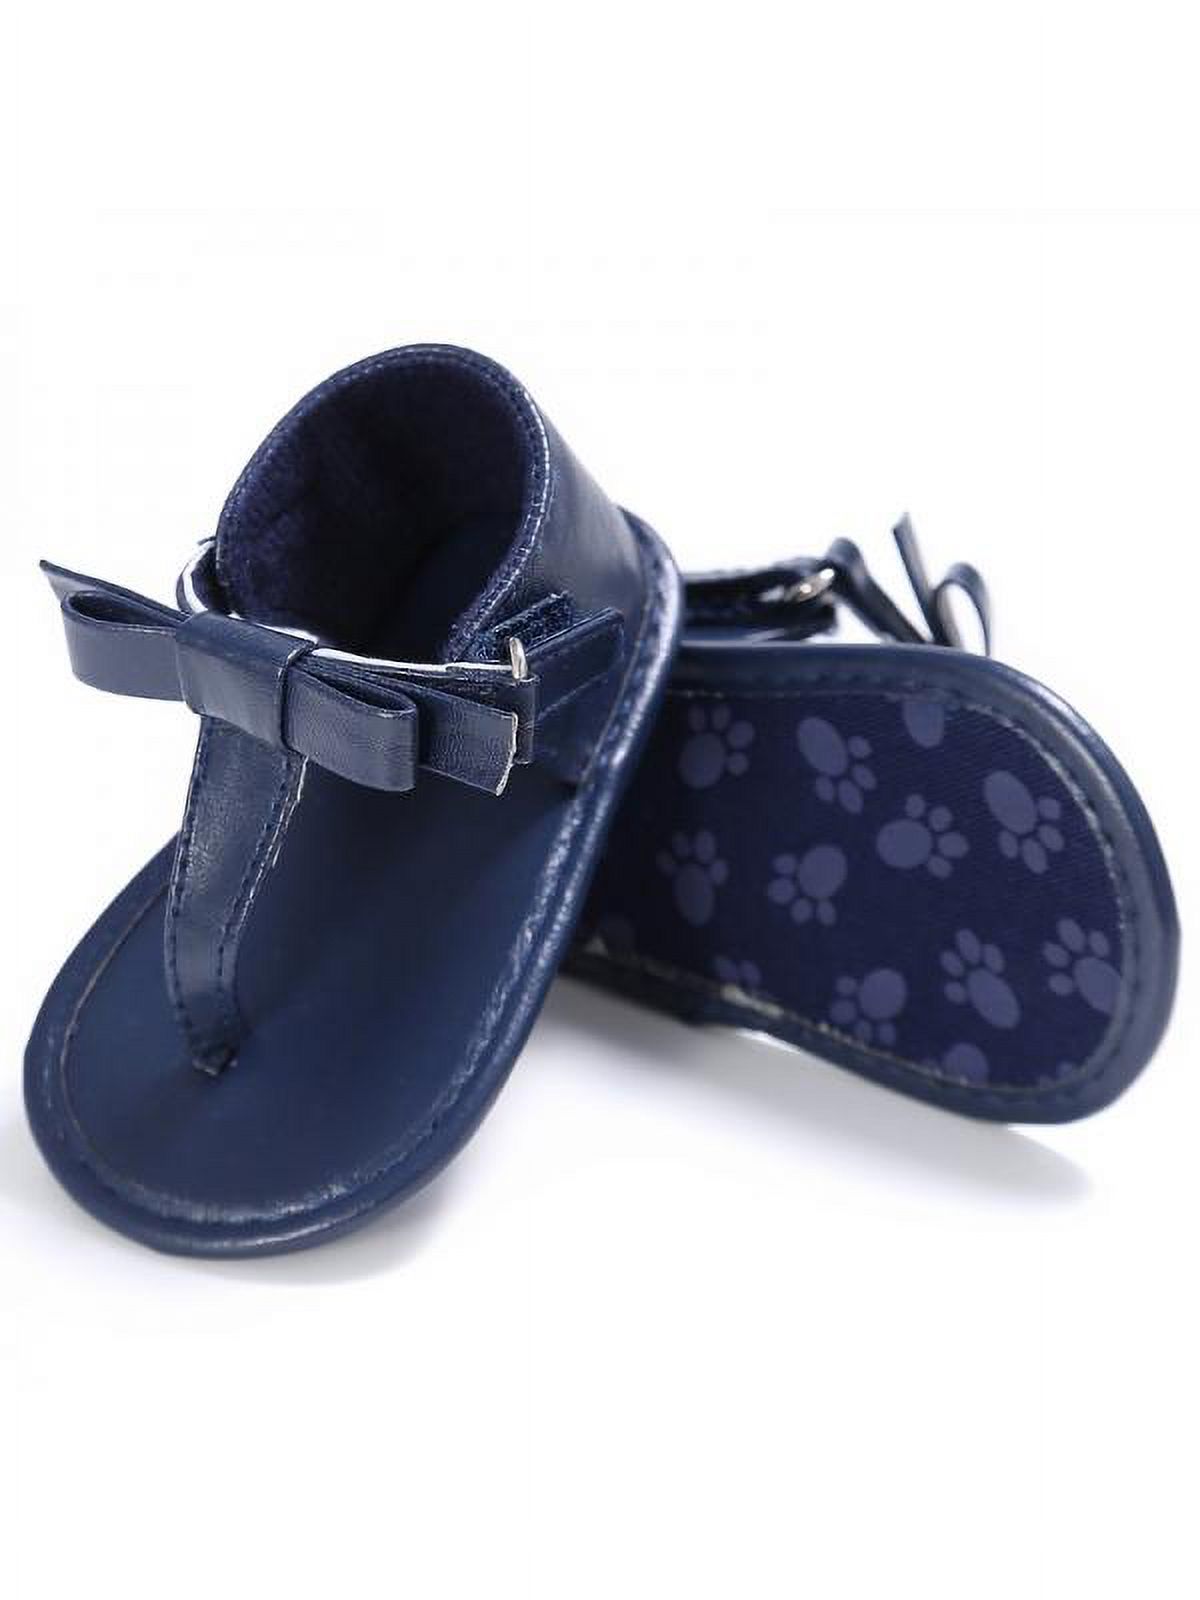 Ochine Newborn PU Leather Soft Shoes Summer Baby Casual Flower Toddler Prewalker Sandals - image 4 of 6